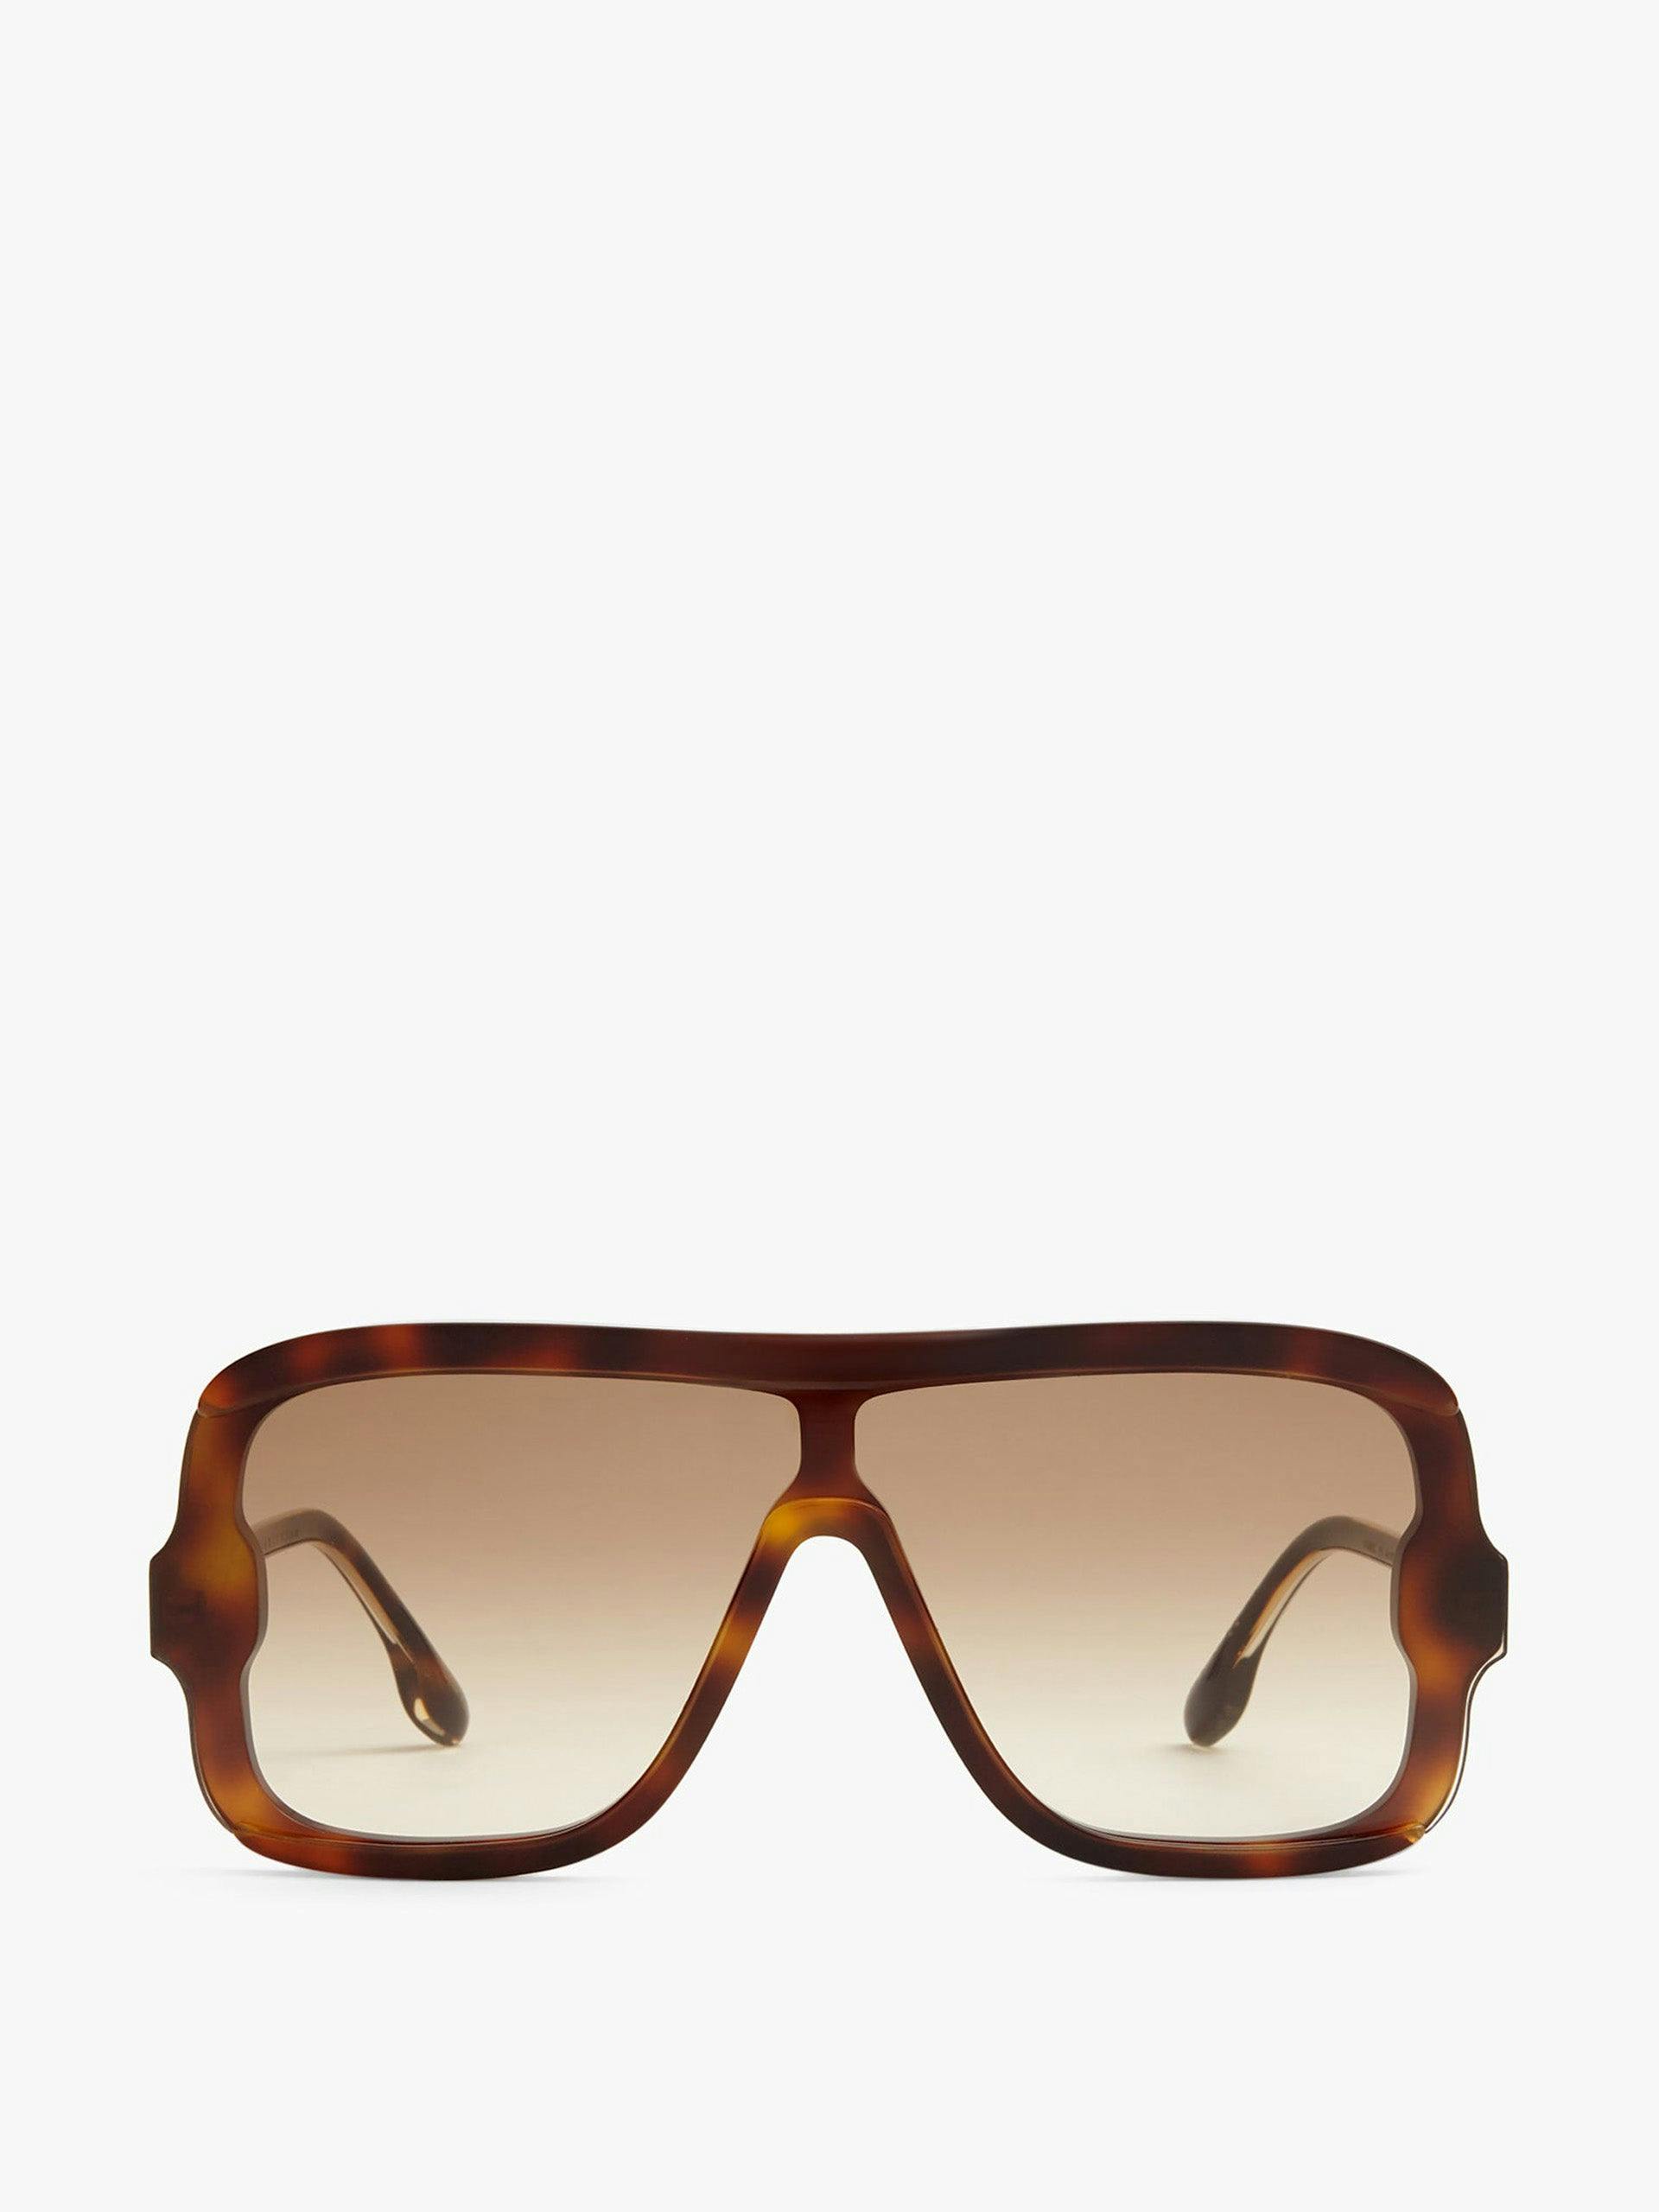 Layered mask sunglasses in tortoise-brown